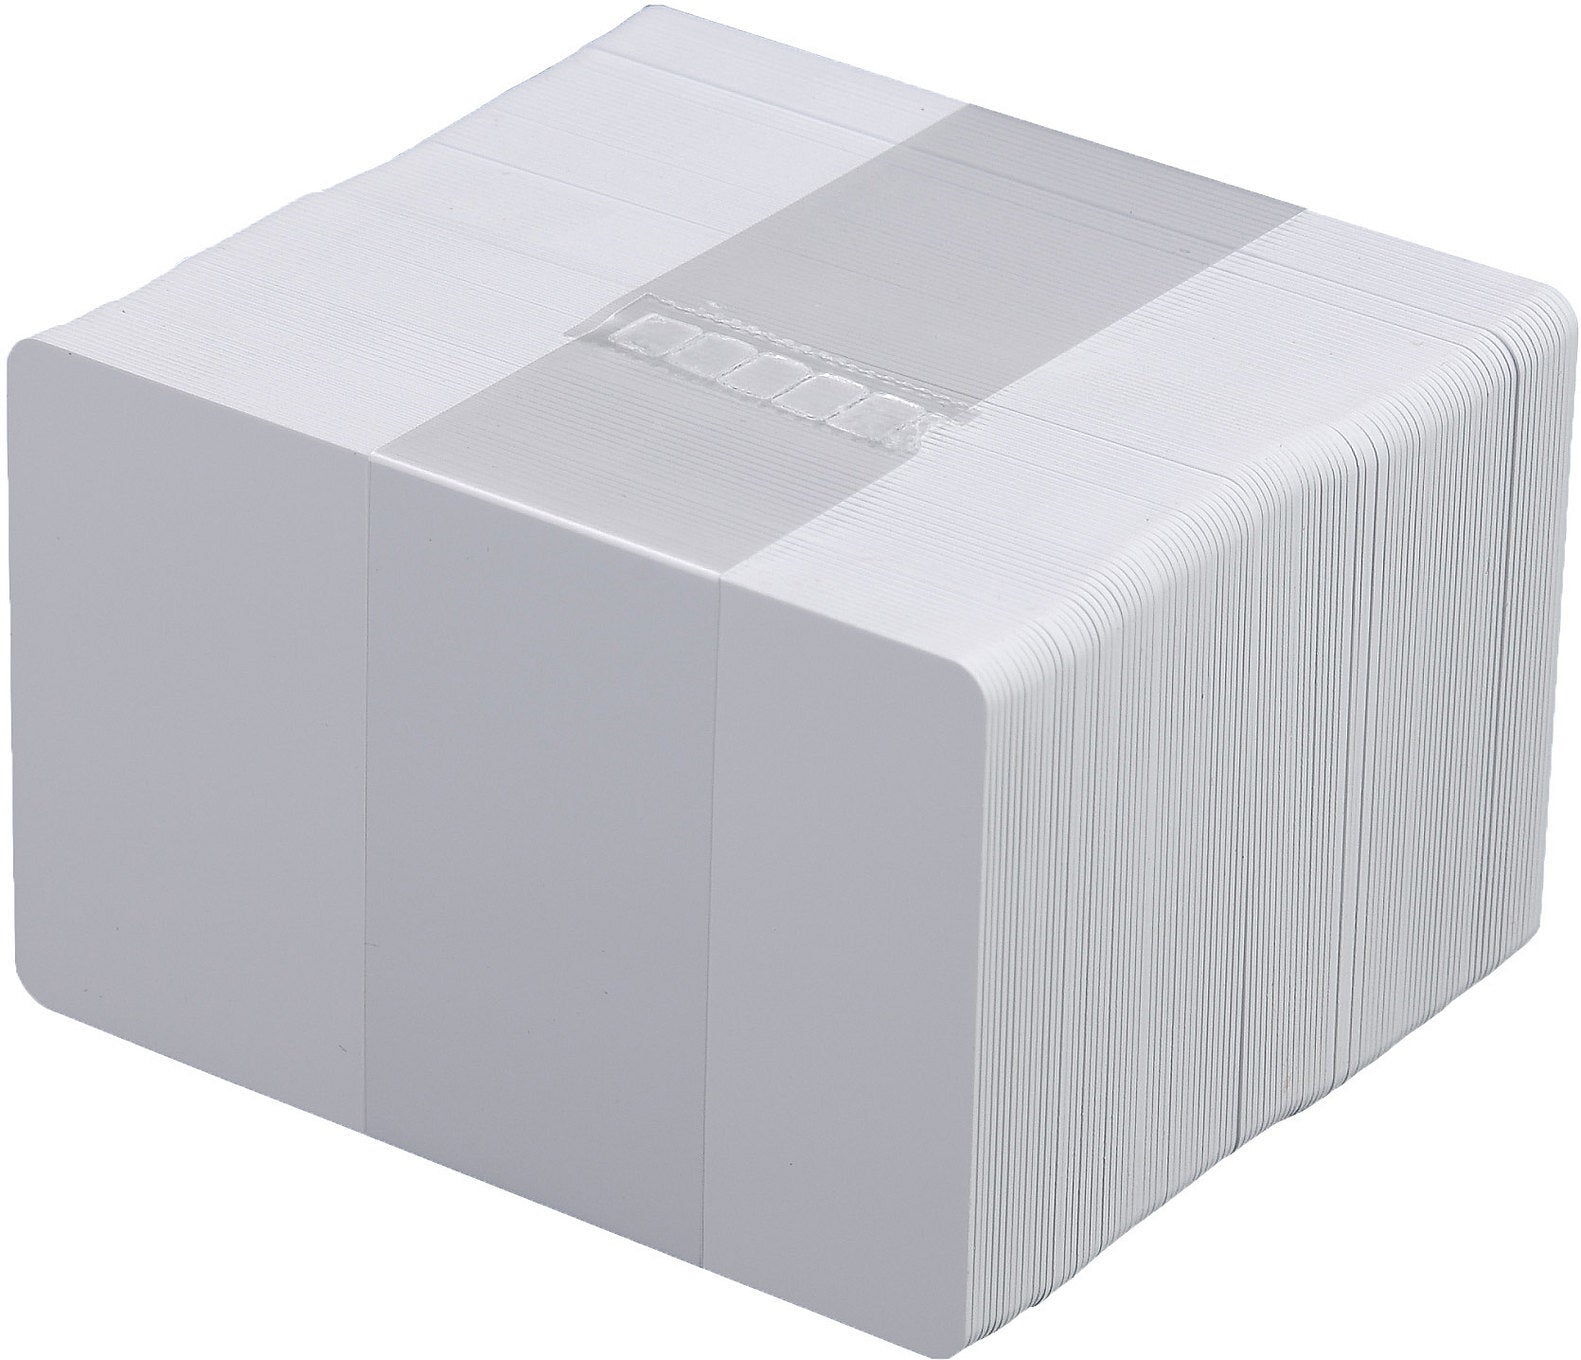 Blank White PVC Plastic ID Cards 760 micron | SPLIT PACKS - 50